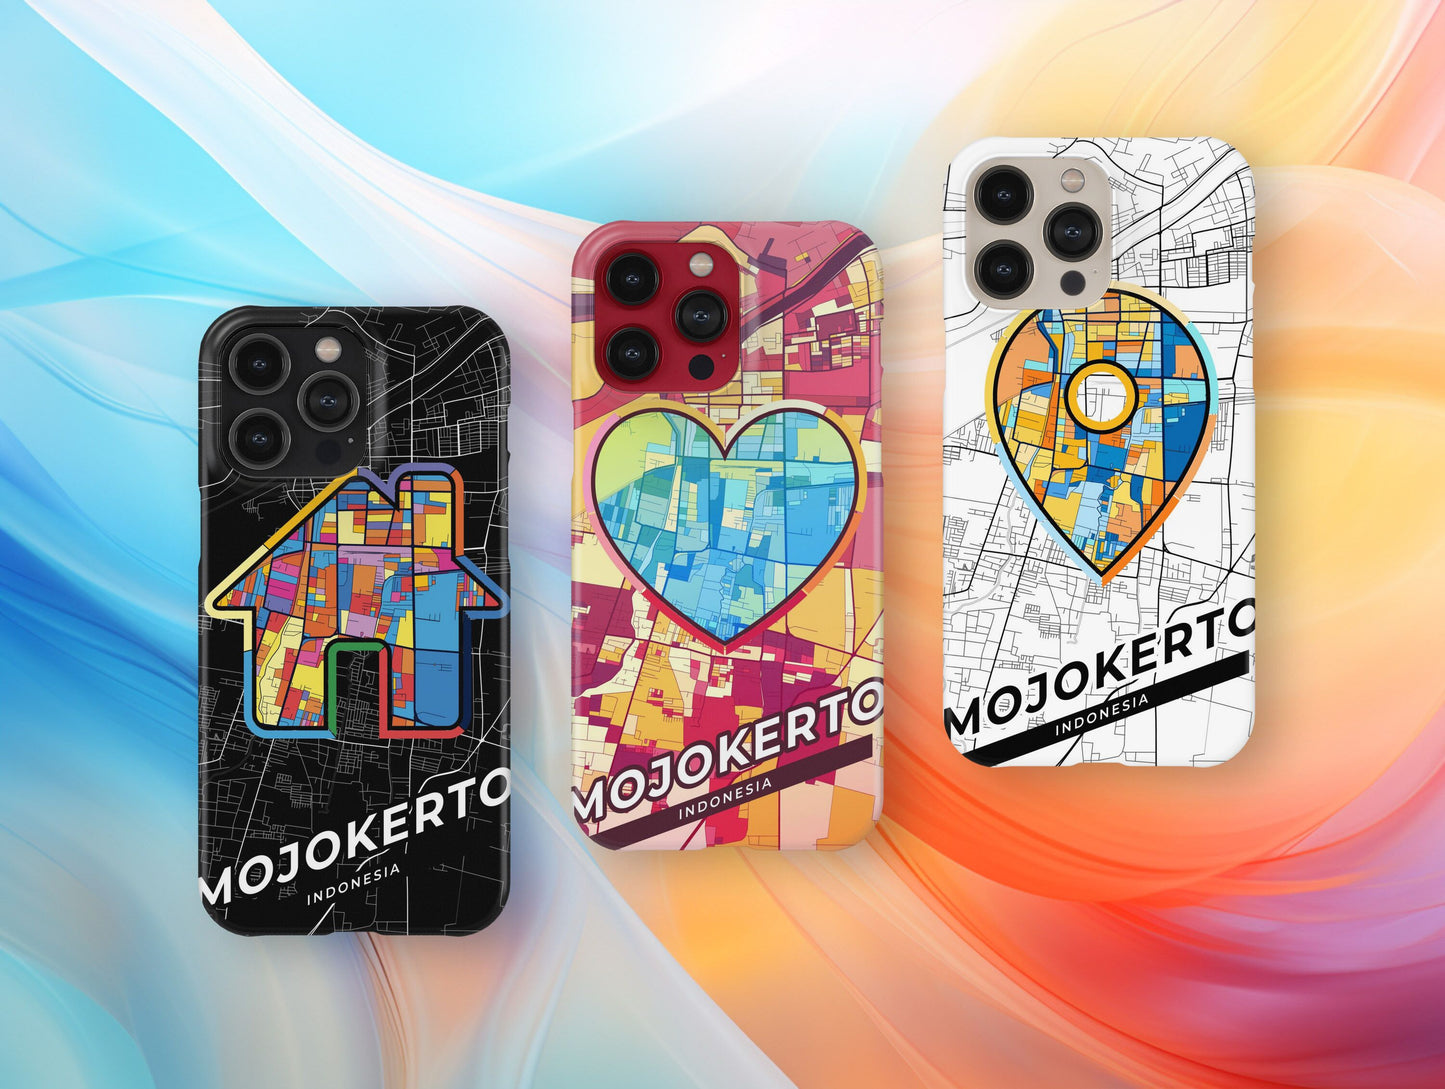 Mojokerto Indonesia slim phone case with colorful icon